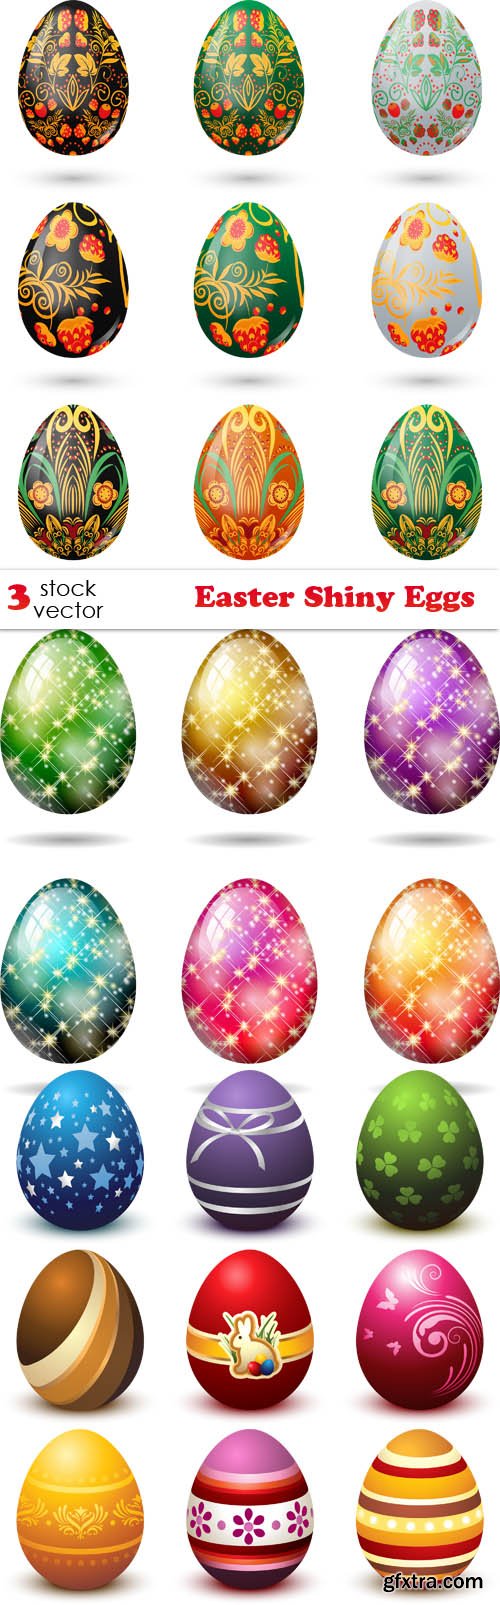 Vectors - Easter Shiny Eggs